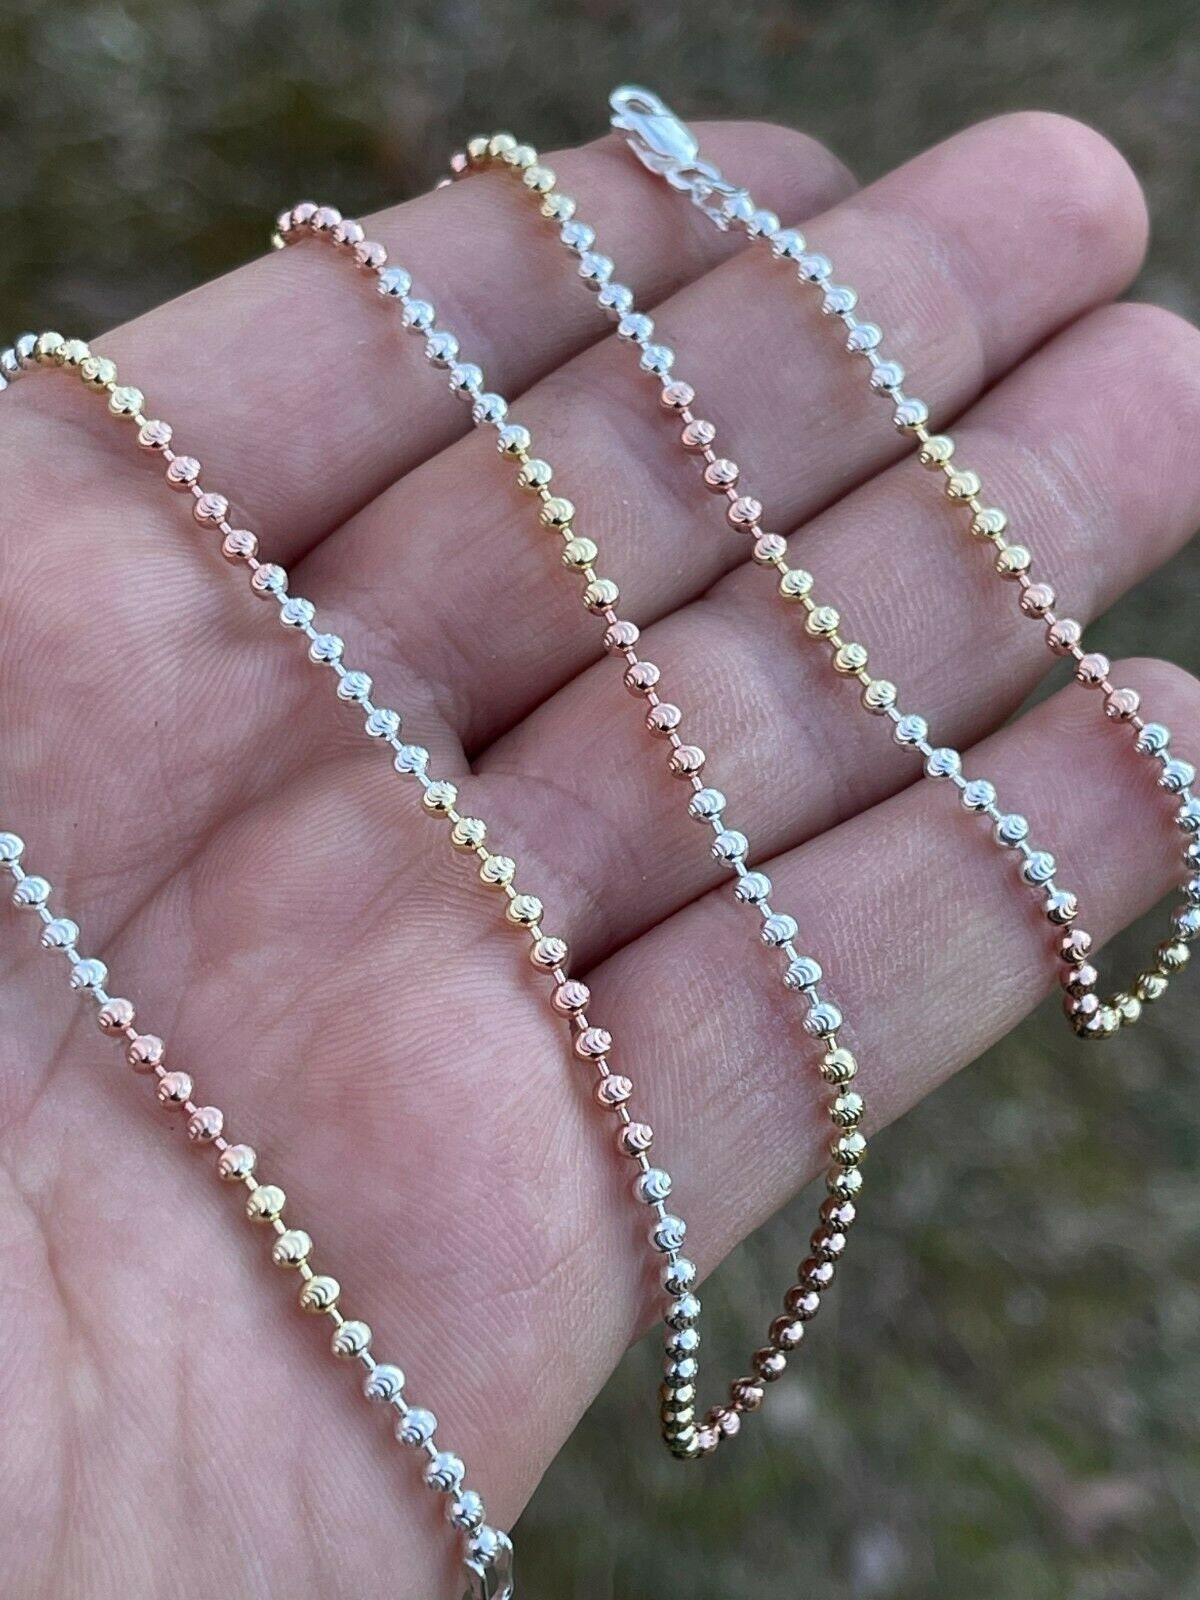 2.5MM Moon Cut Bead Chain (Semi Hollow)